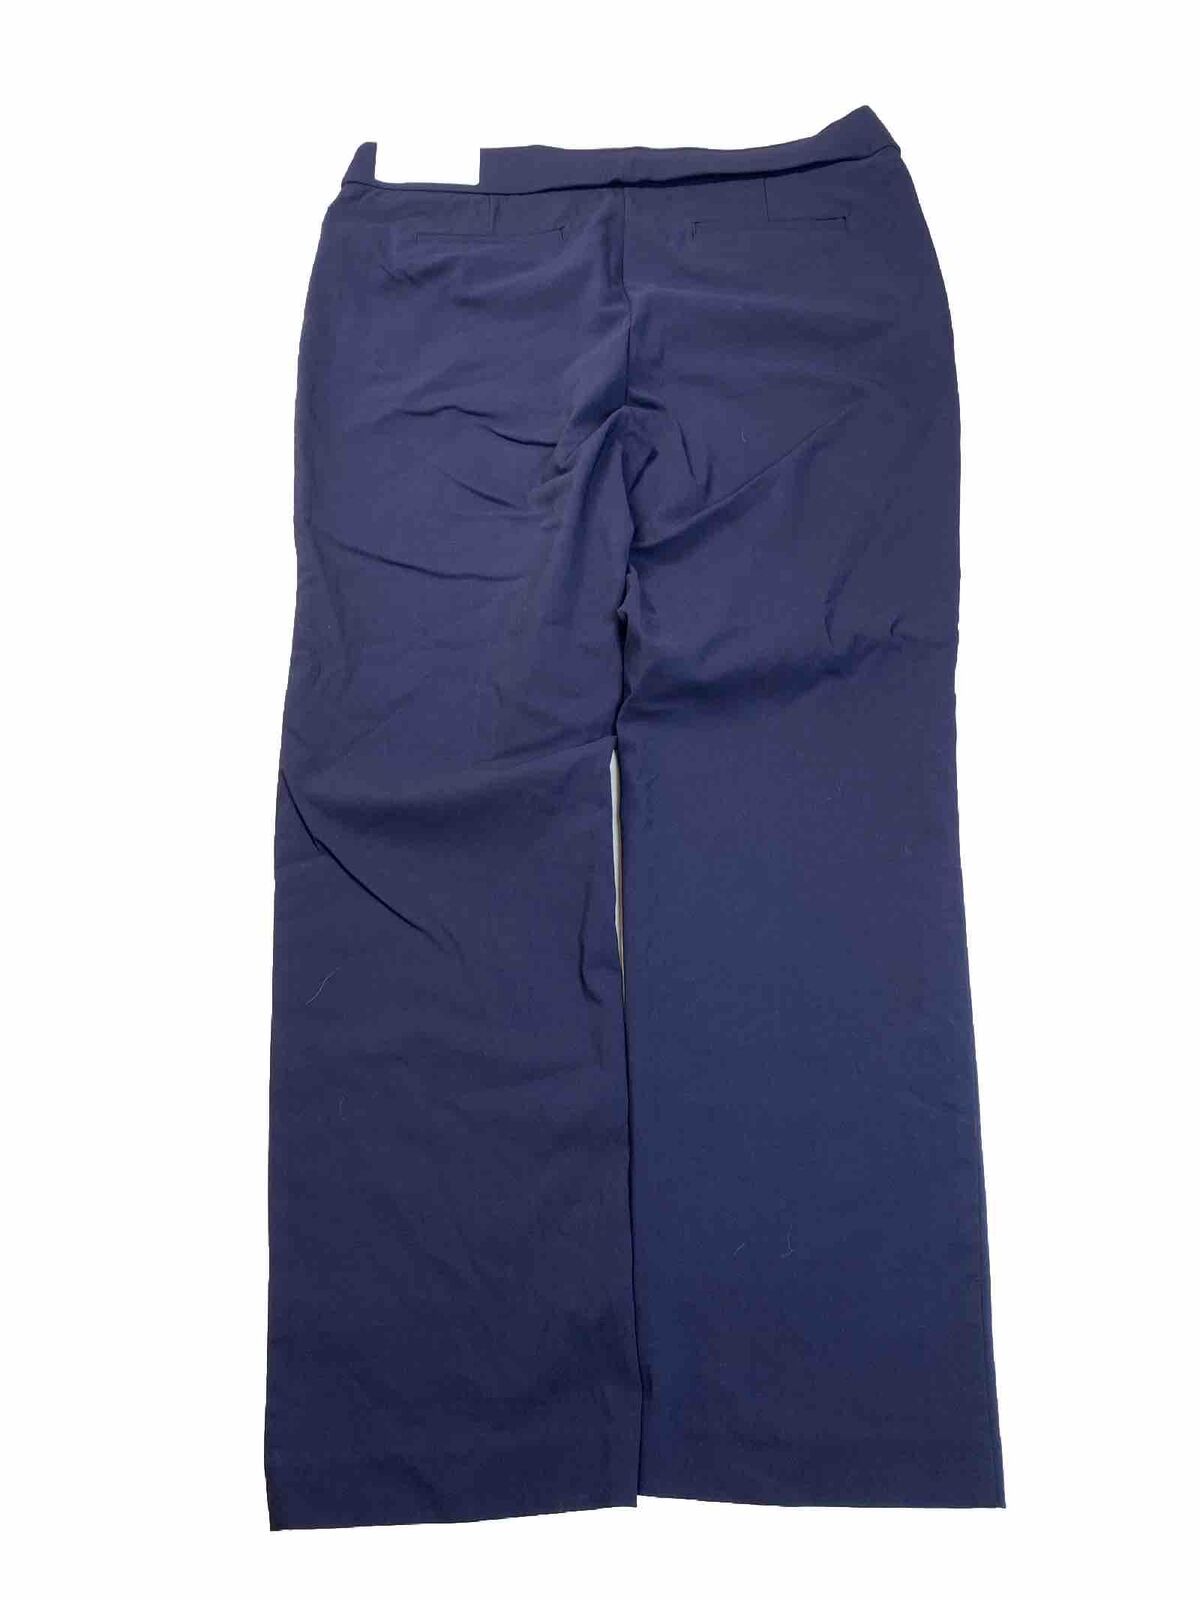 NEW Liz Claiborne Women's Blue Straight Leg Pull On Dress Pants - 14